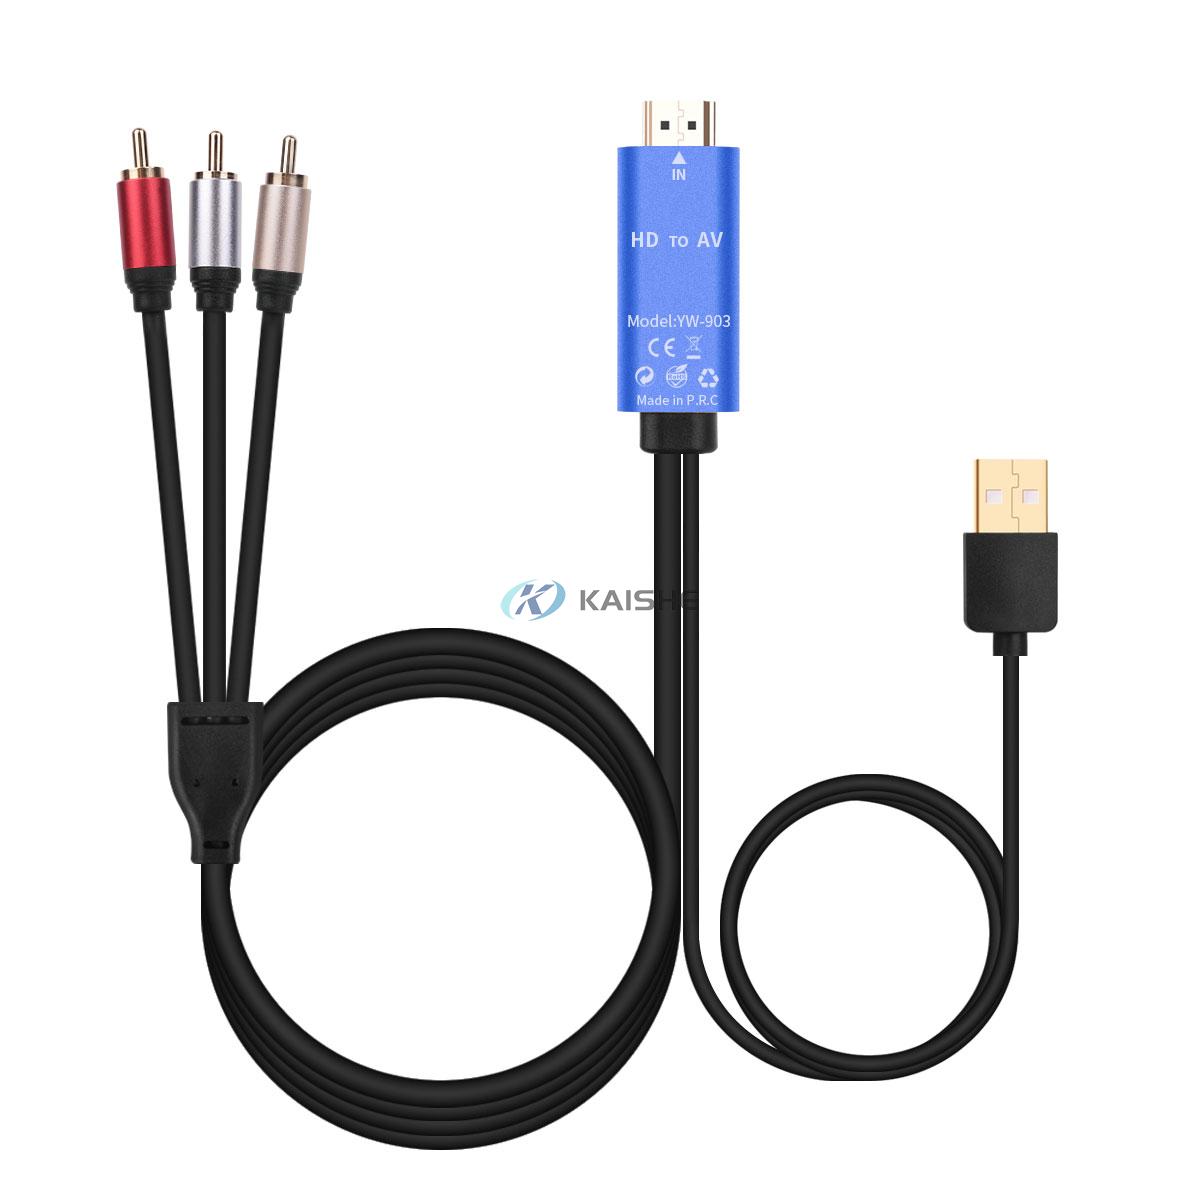 HDMI to AV CVBS Converter Adapter Cable, PAL/NTSC with USB Charging